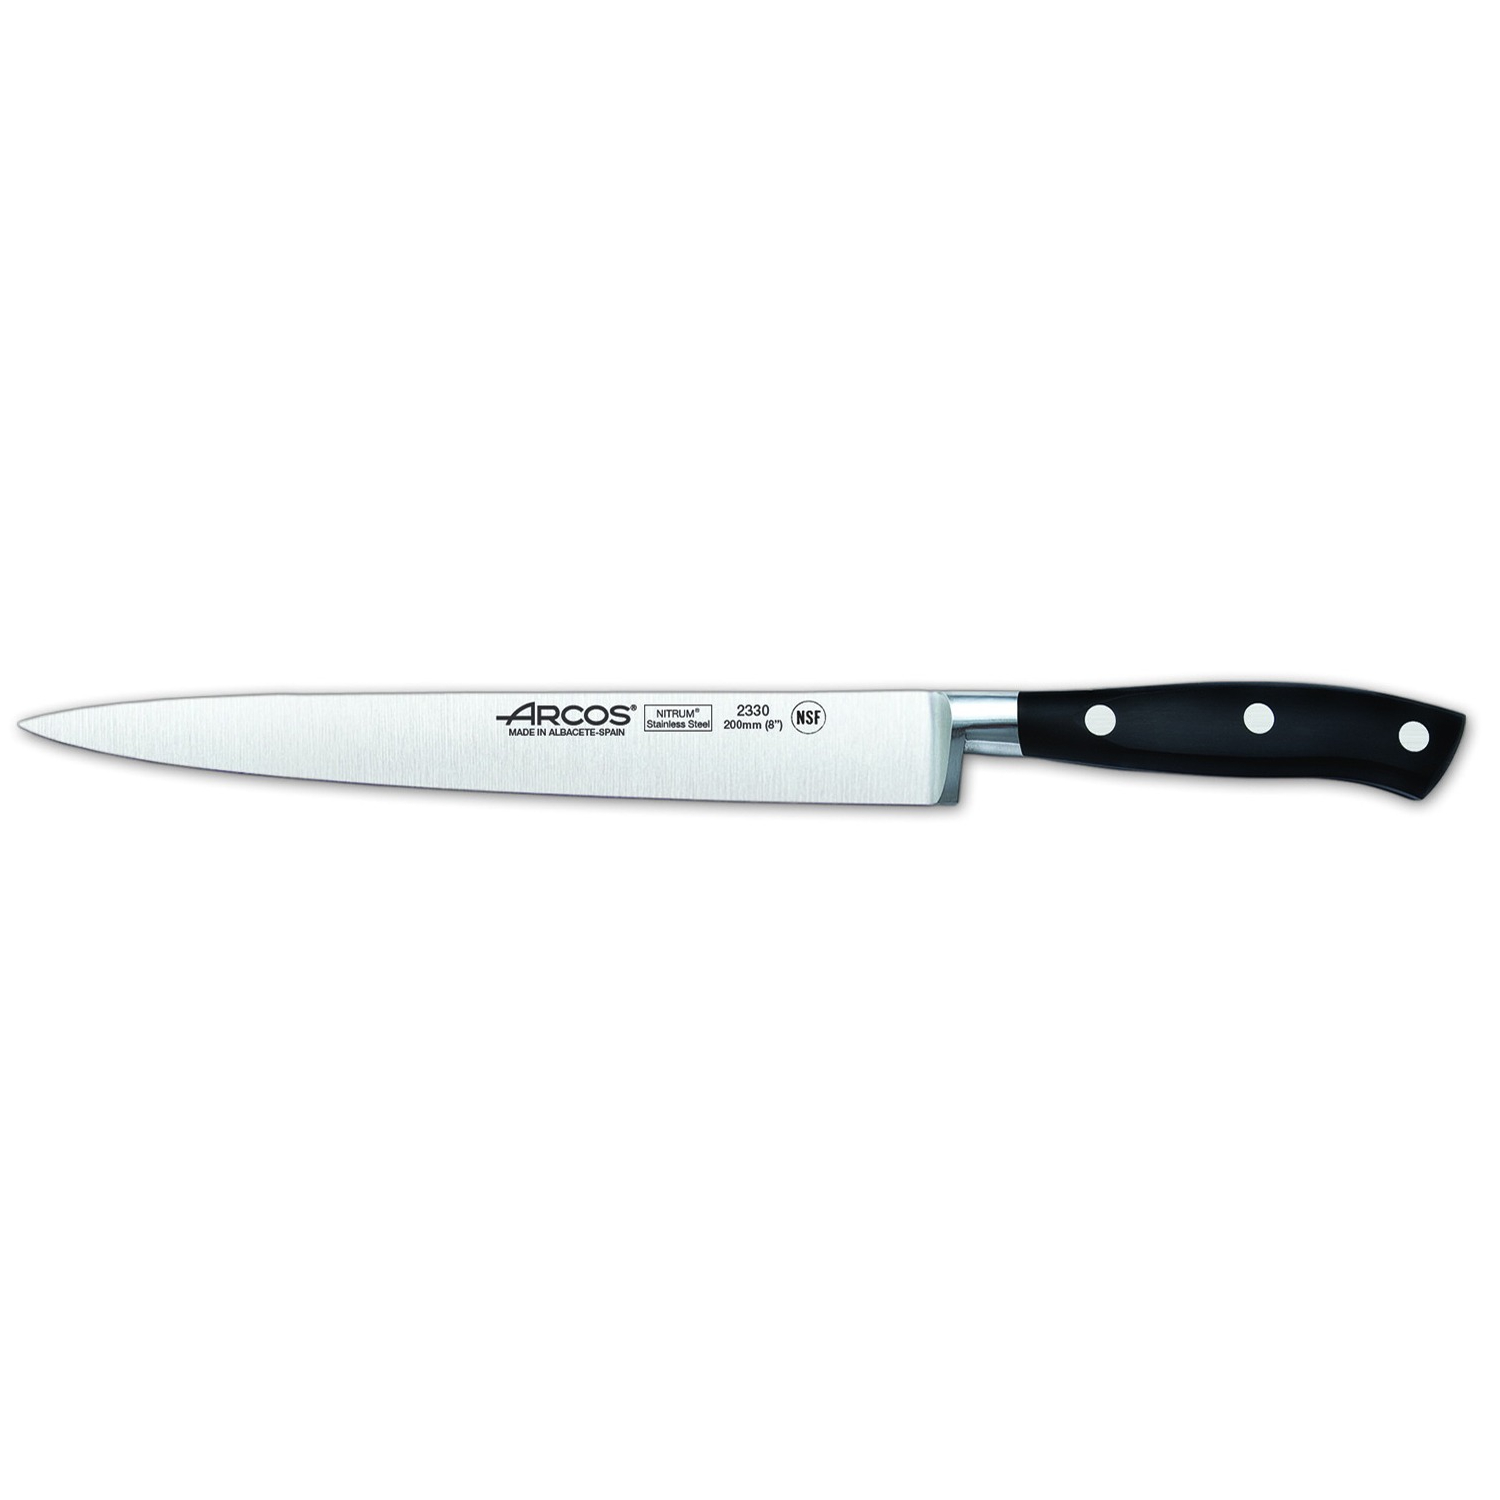 Нож для резки мяса Arcos Riviera 20 см нож для мяса 20 см riviera blanca arcos